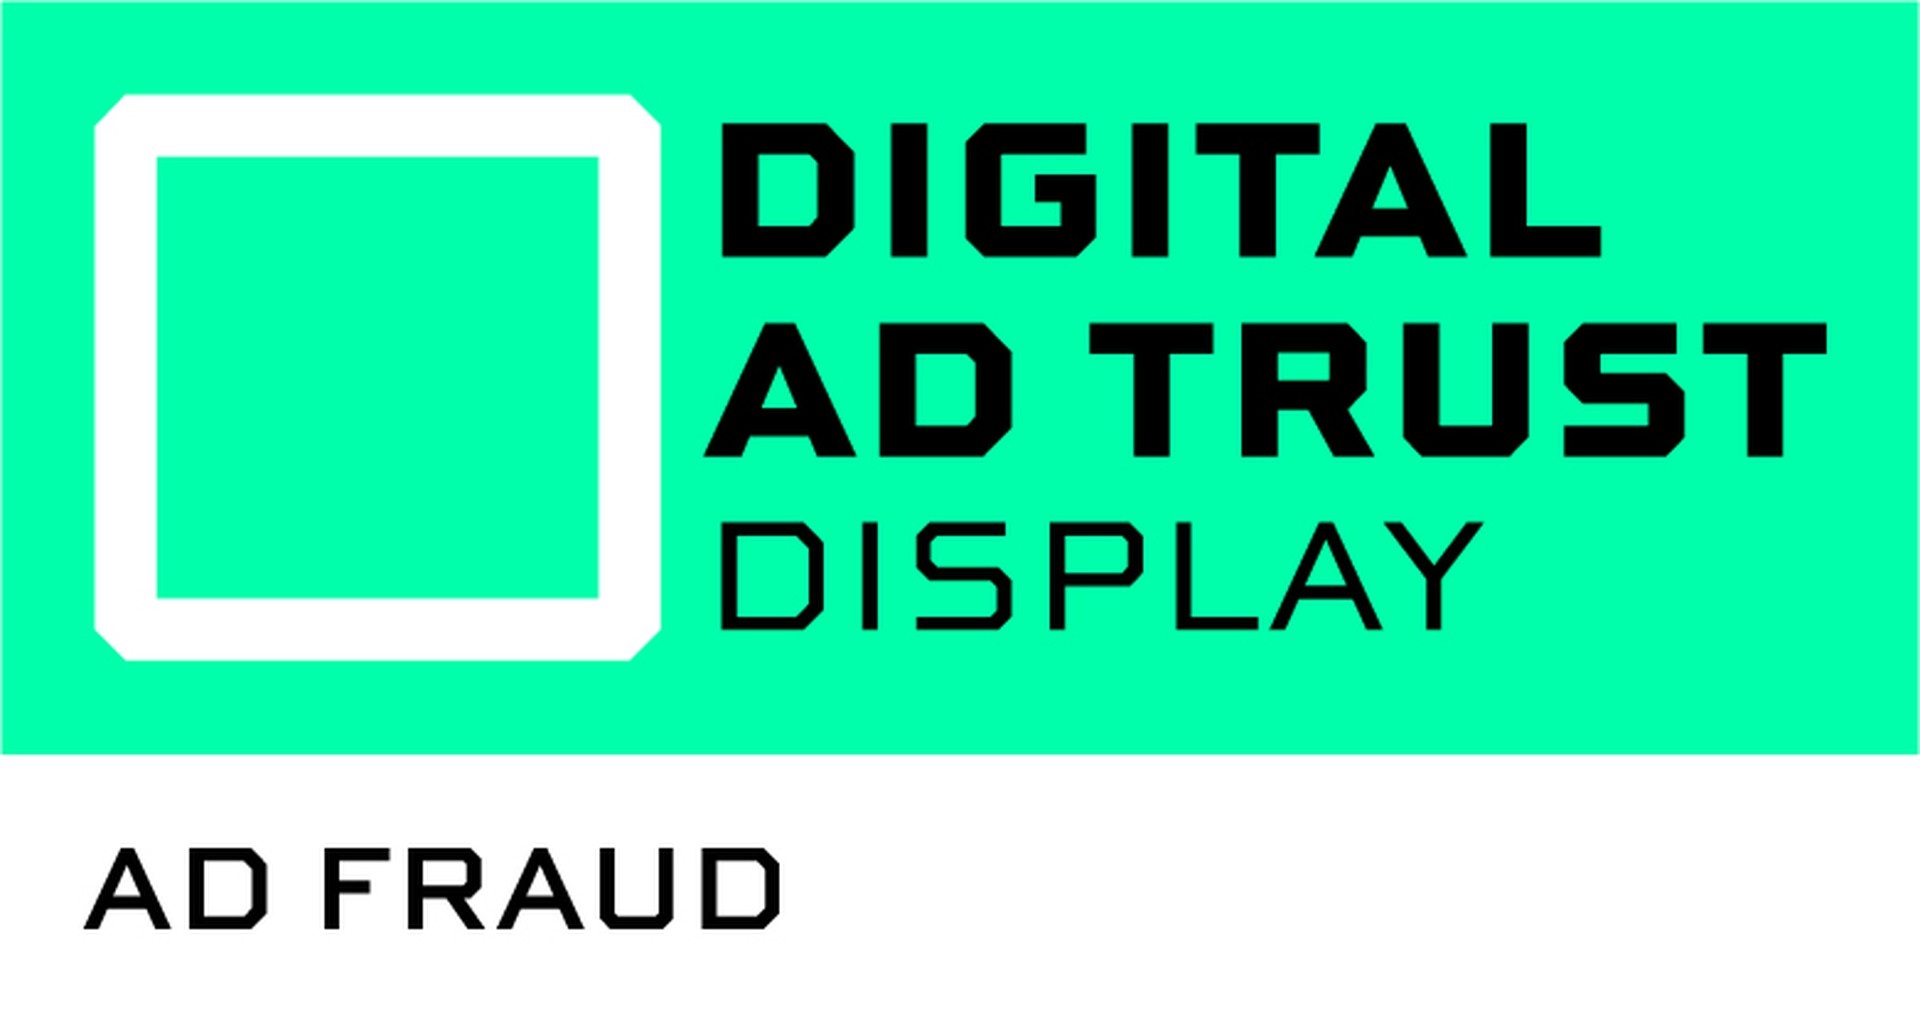 labels_01_DAT 1 Ad Fraud.jpg